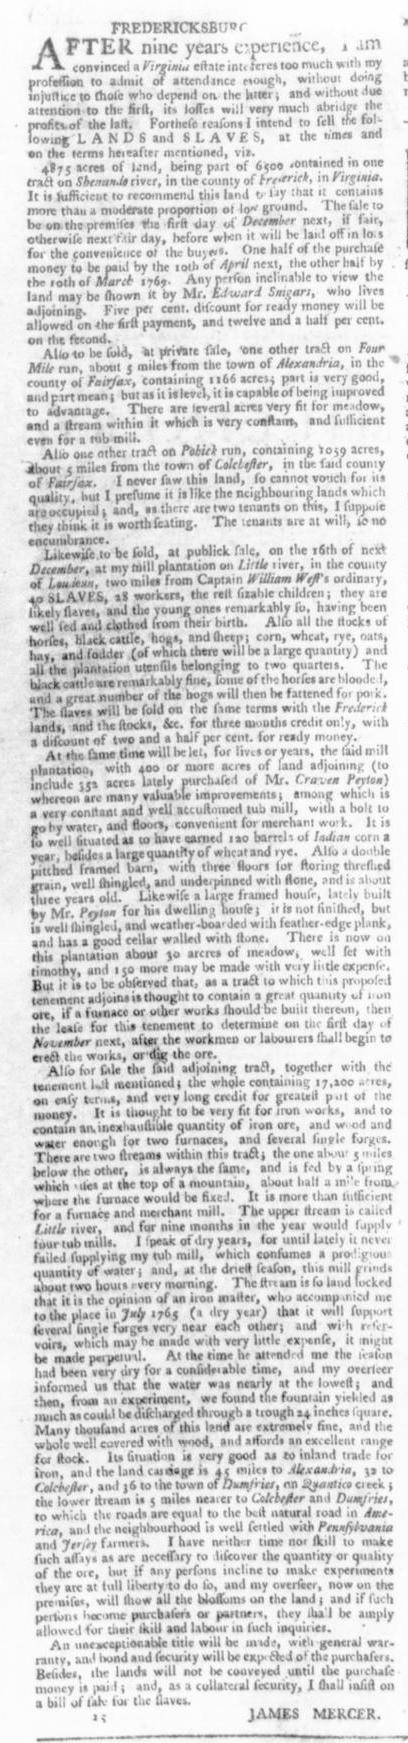 Sep 24 - Virginia Gazette Slavery 10